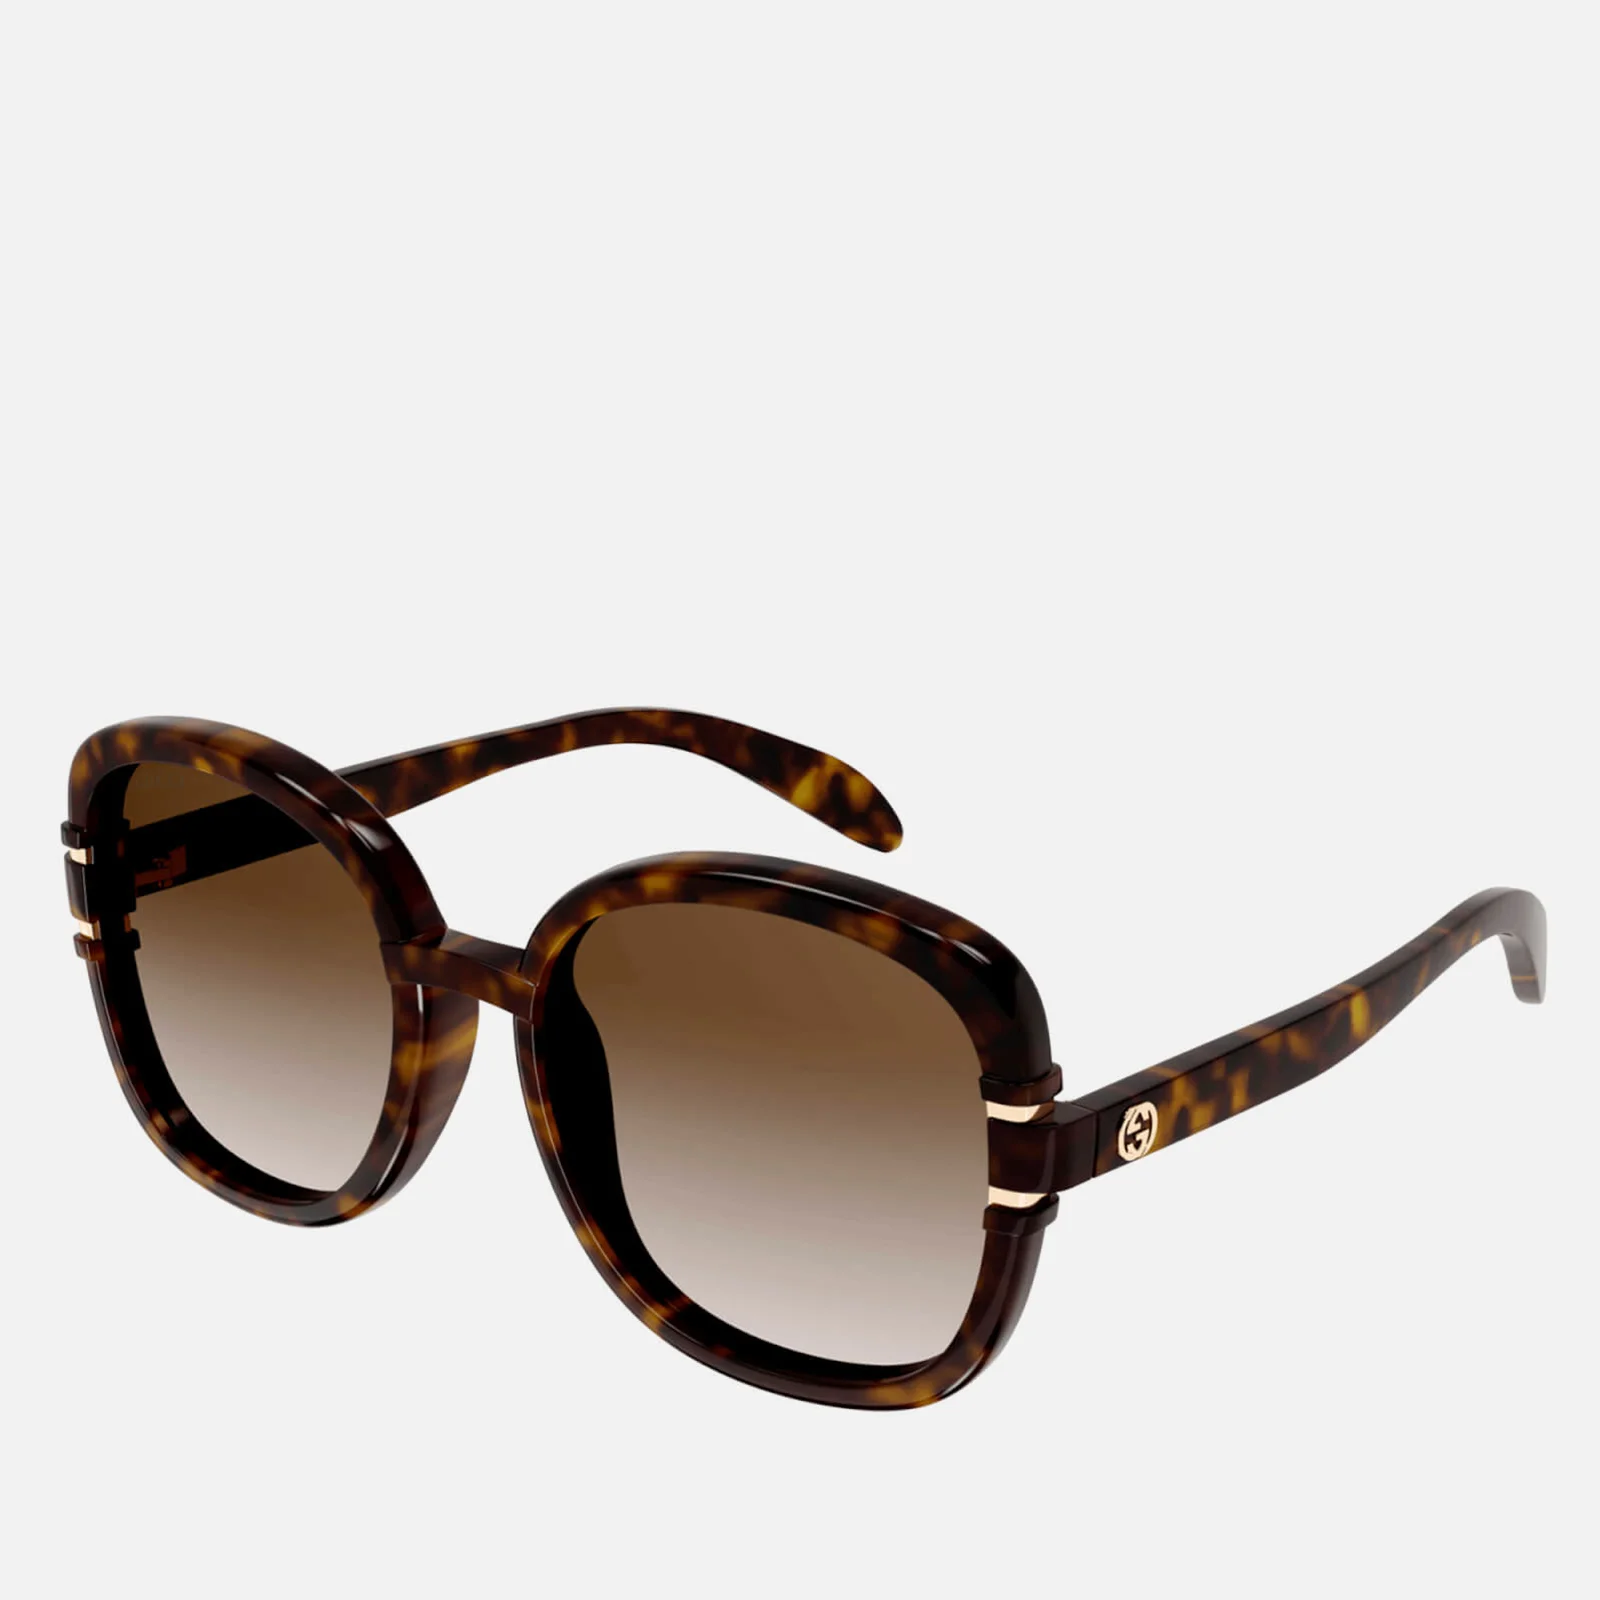 Gucci Women's Oversized Square Acetate Sunglasses - Havana/Havana/Brown Image 1